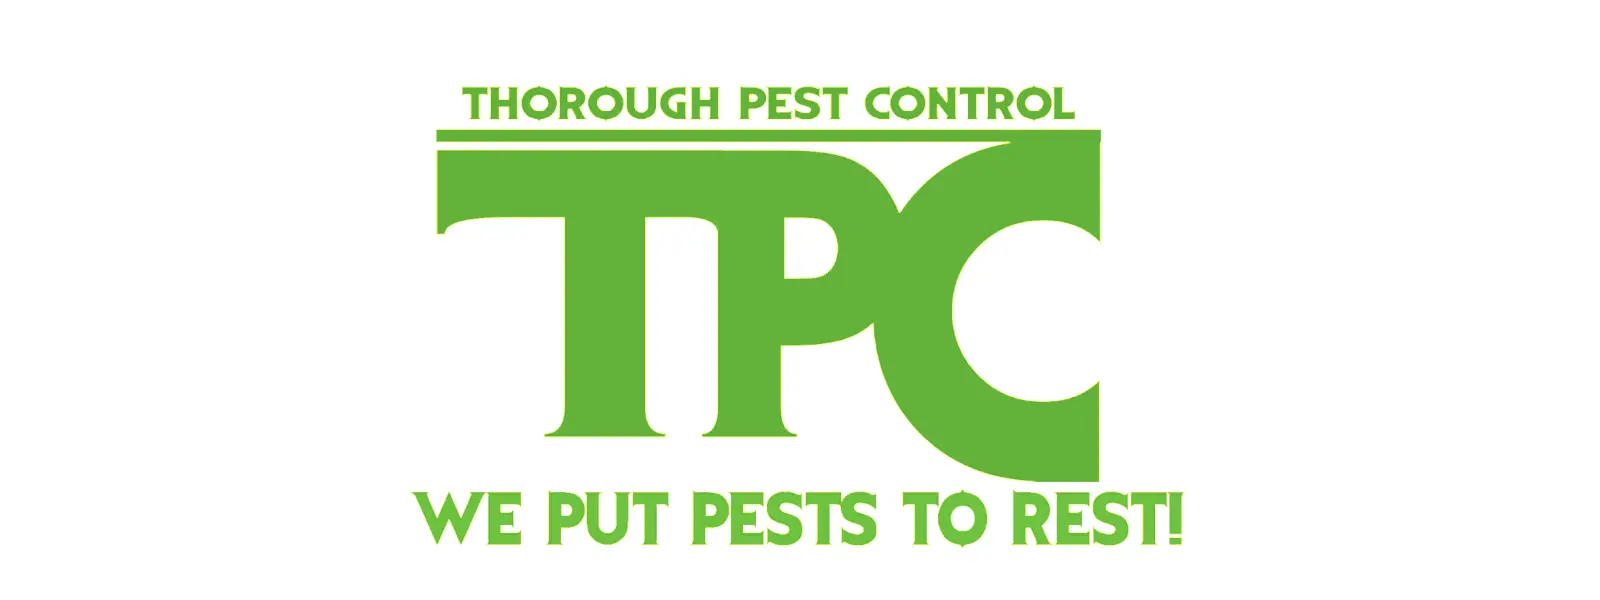 Thorough Pest Control 1 Image Logo